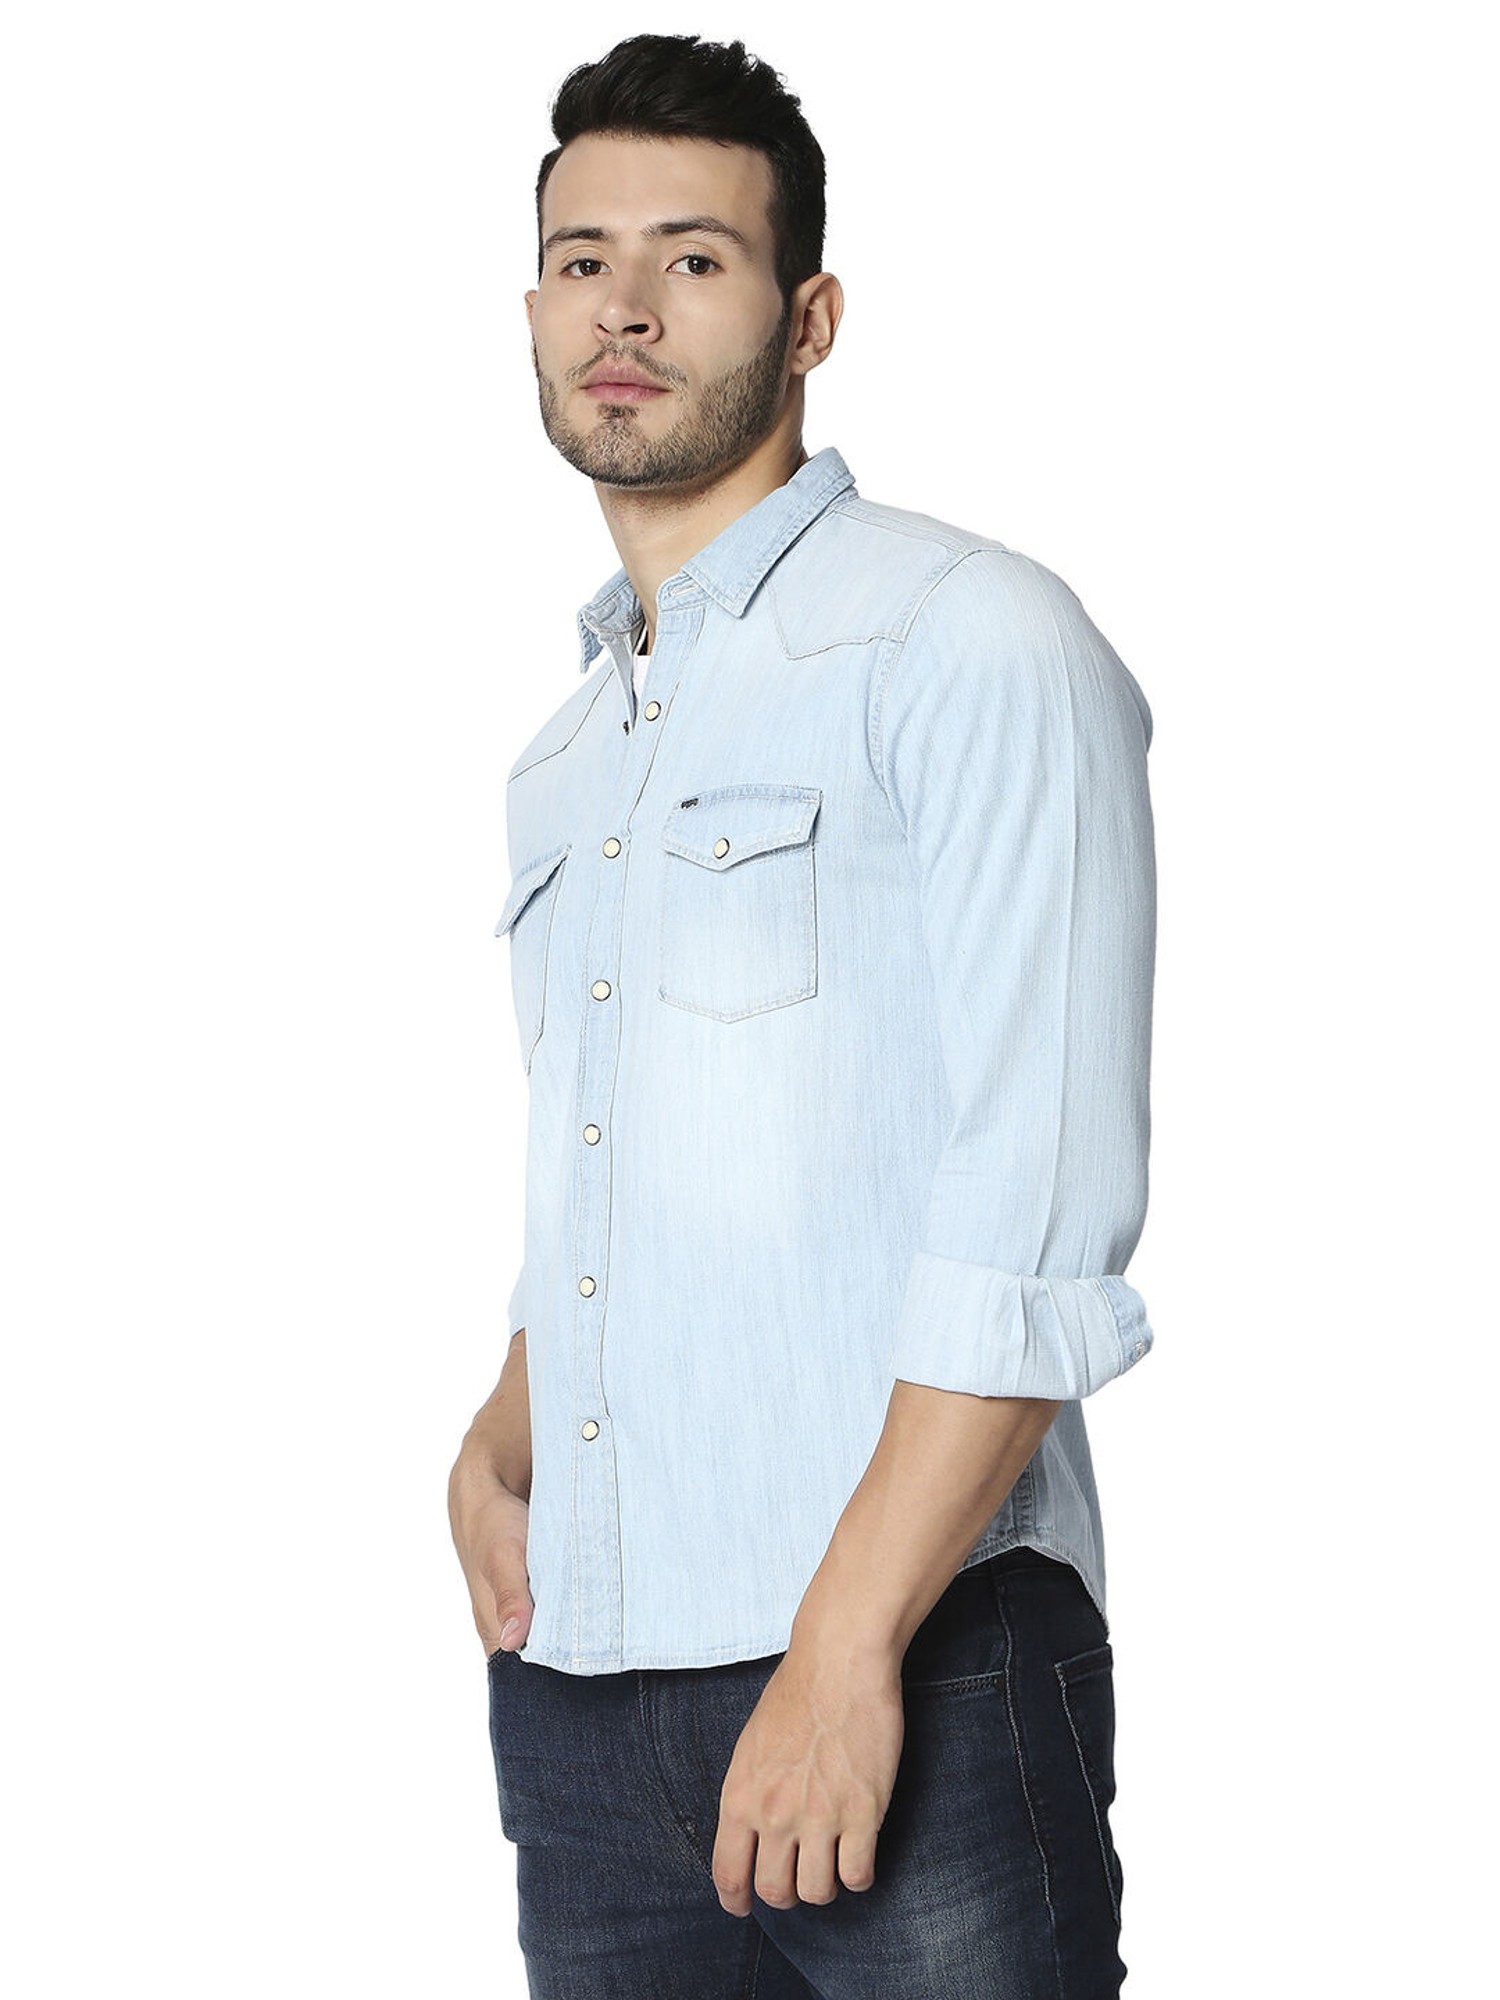 Buy Online Navy Urban Shirt with Zipper Pockets for Men Online at Zobello